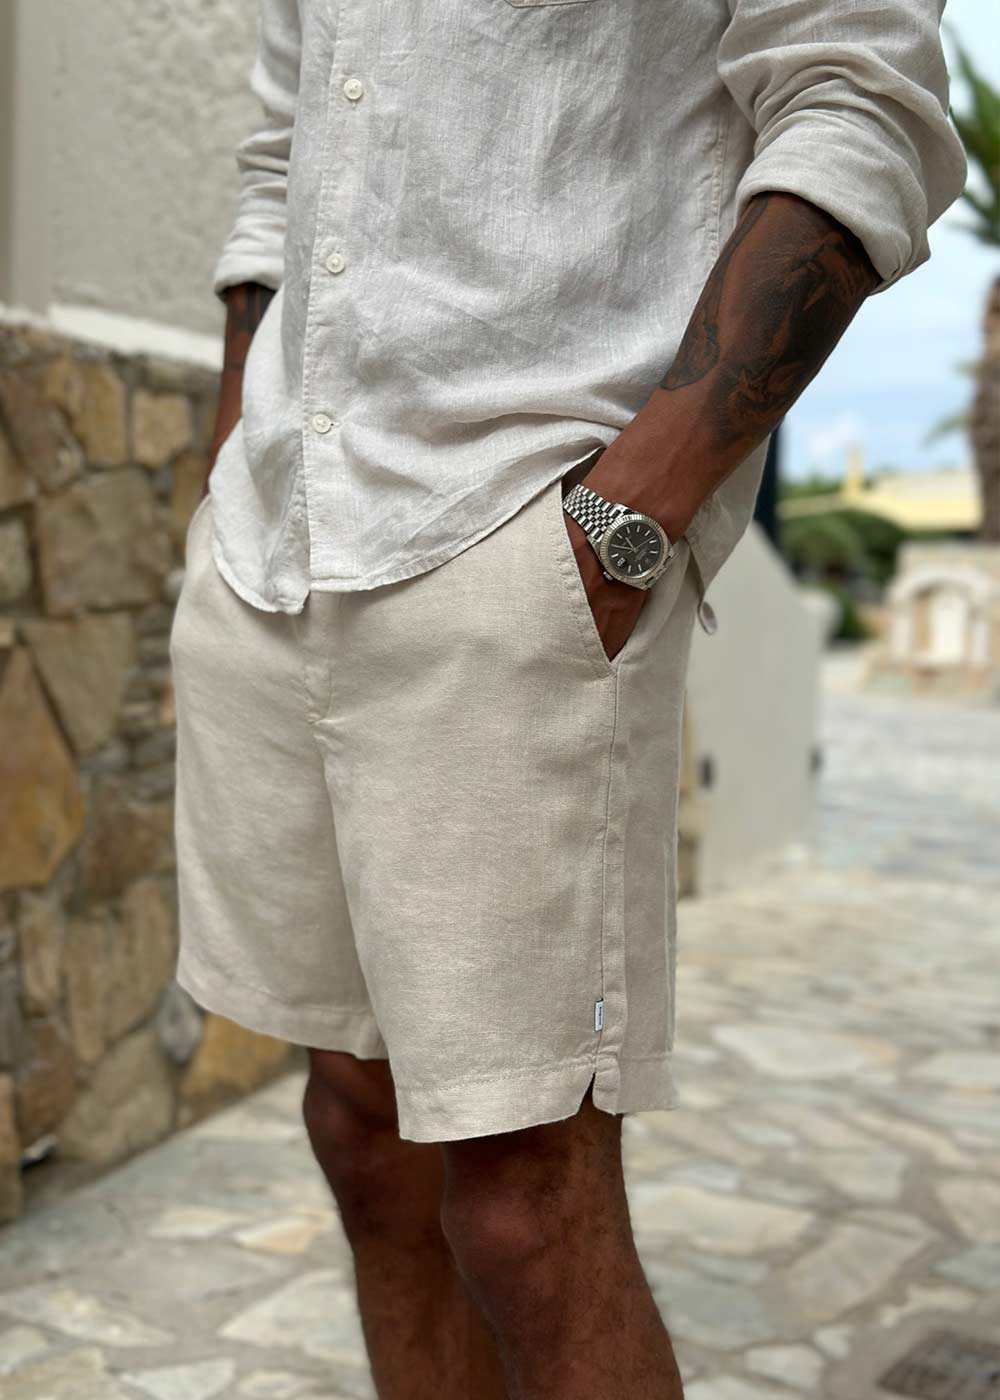 Bommy Linen Shorts - Sand